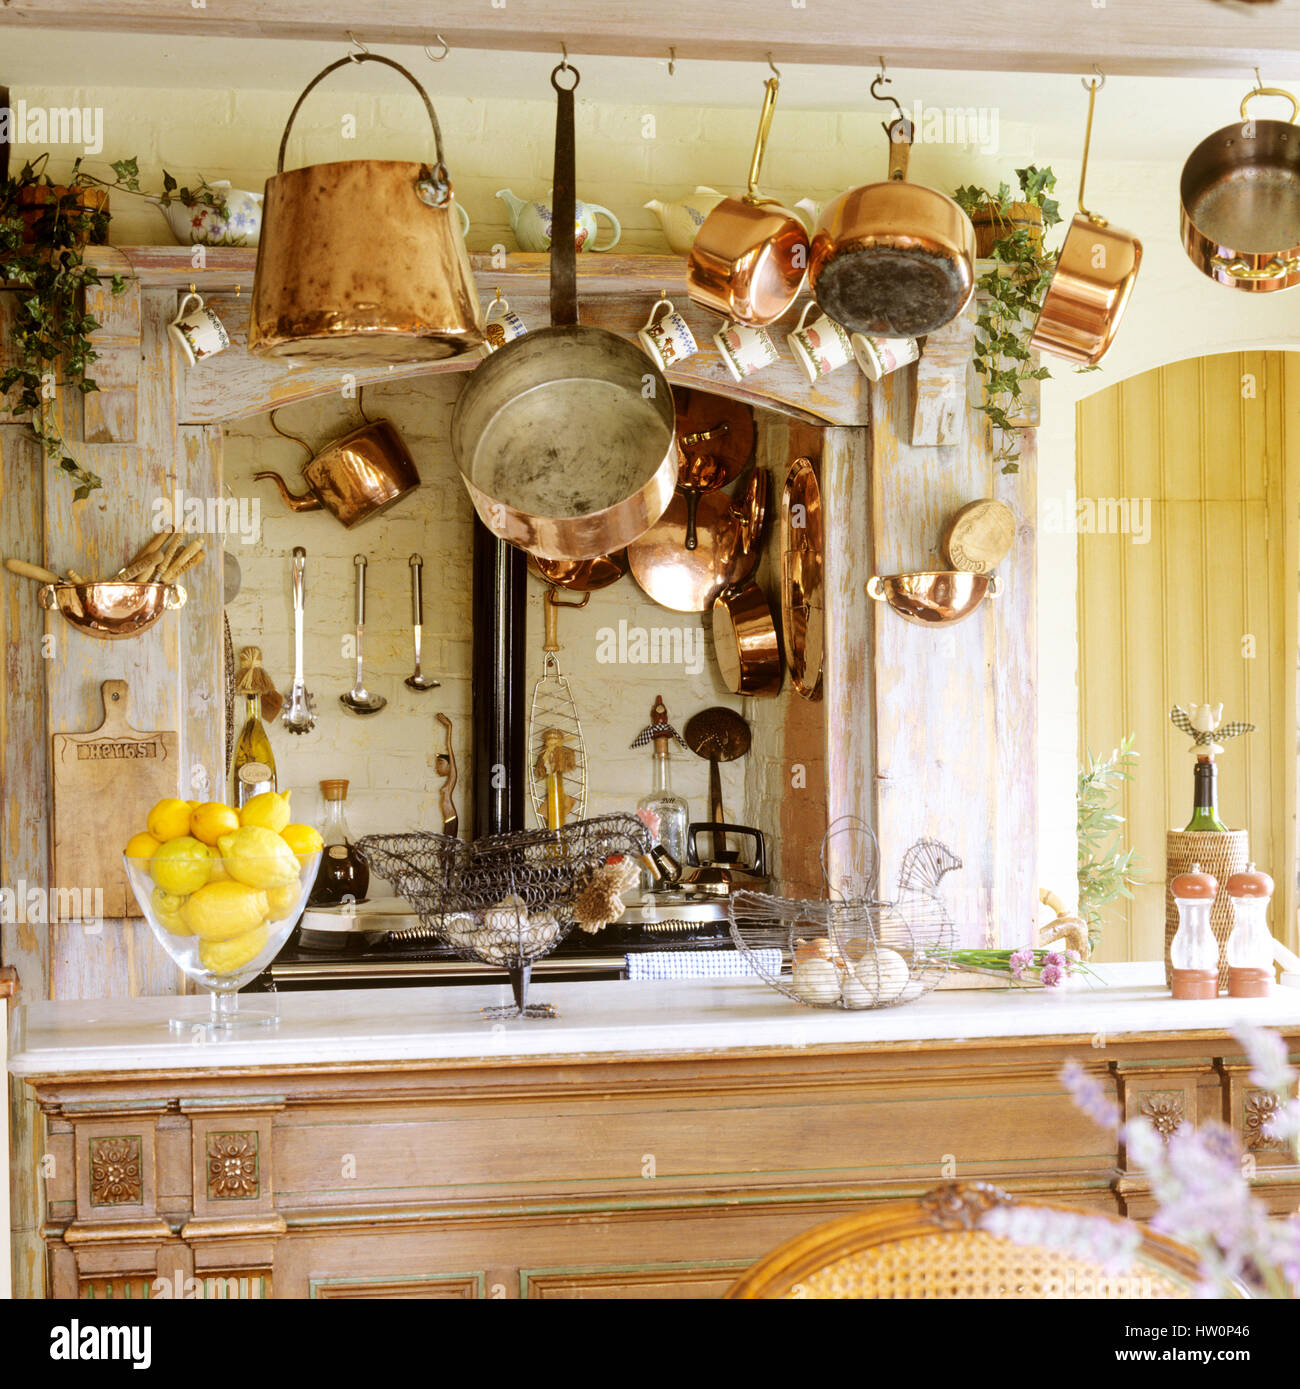 Panca in legno in stile rustico cucina. Foto Stock